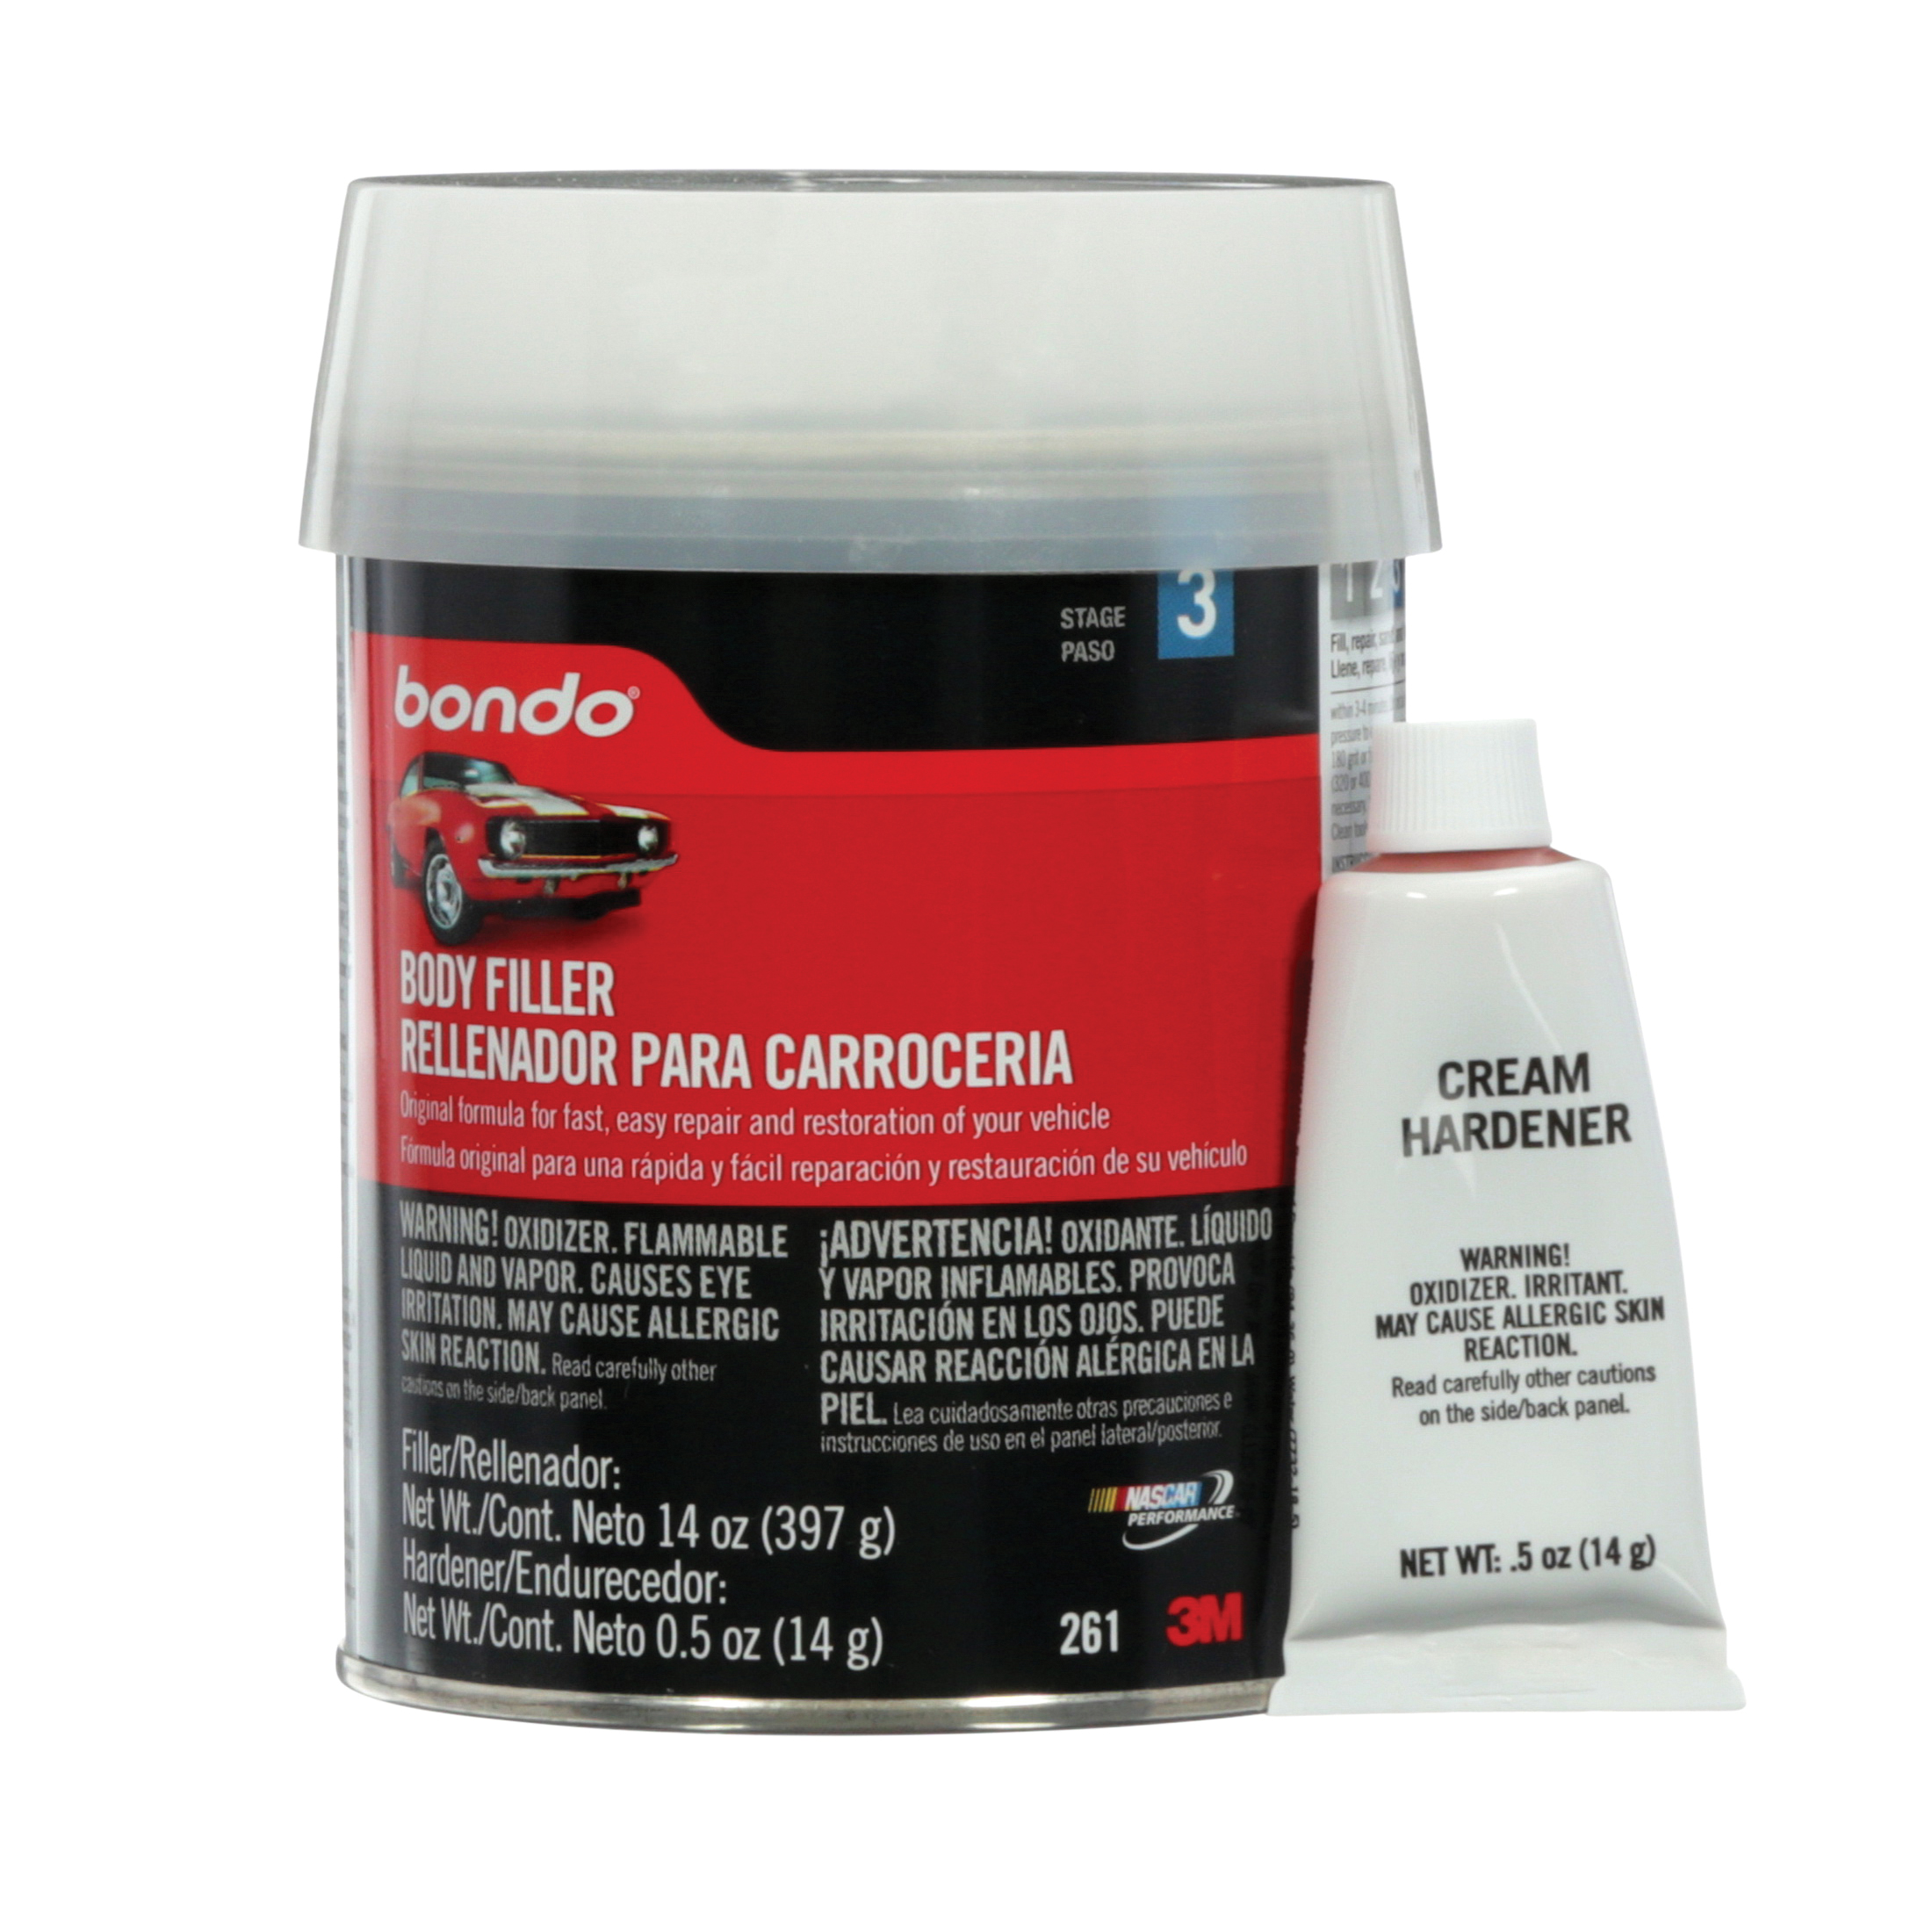 3M™ Bondo™ 076308-00261 2-Component 2-Part Lightweight Body Filler, 1 pt Container, Part A: Viscous/Part B: Paste Form, Part A: Light Gray/Part B: Red, 20 to 30 min Curing